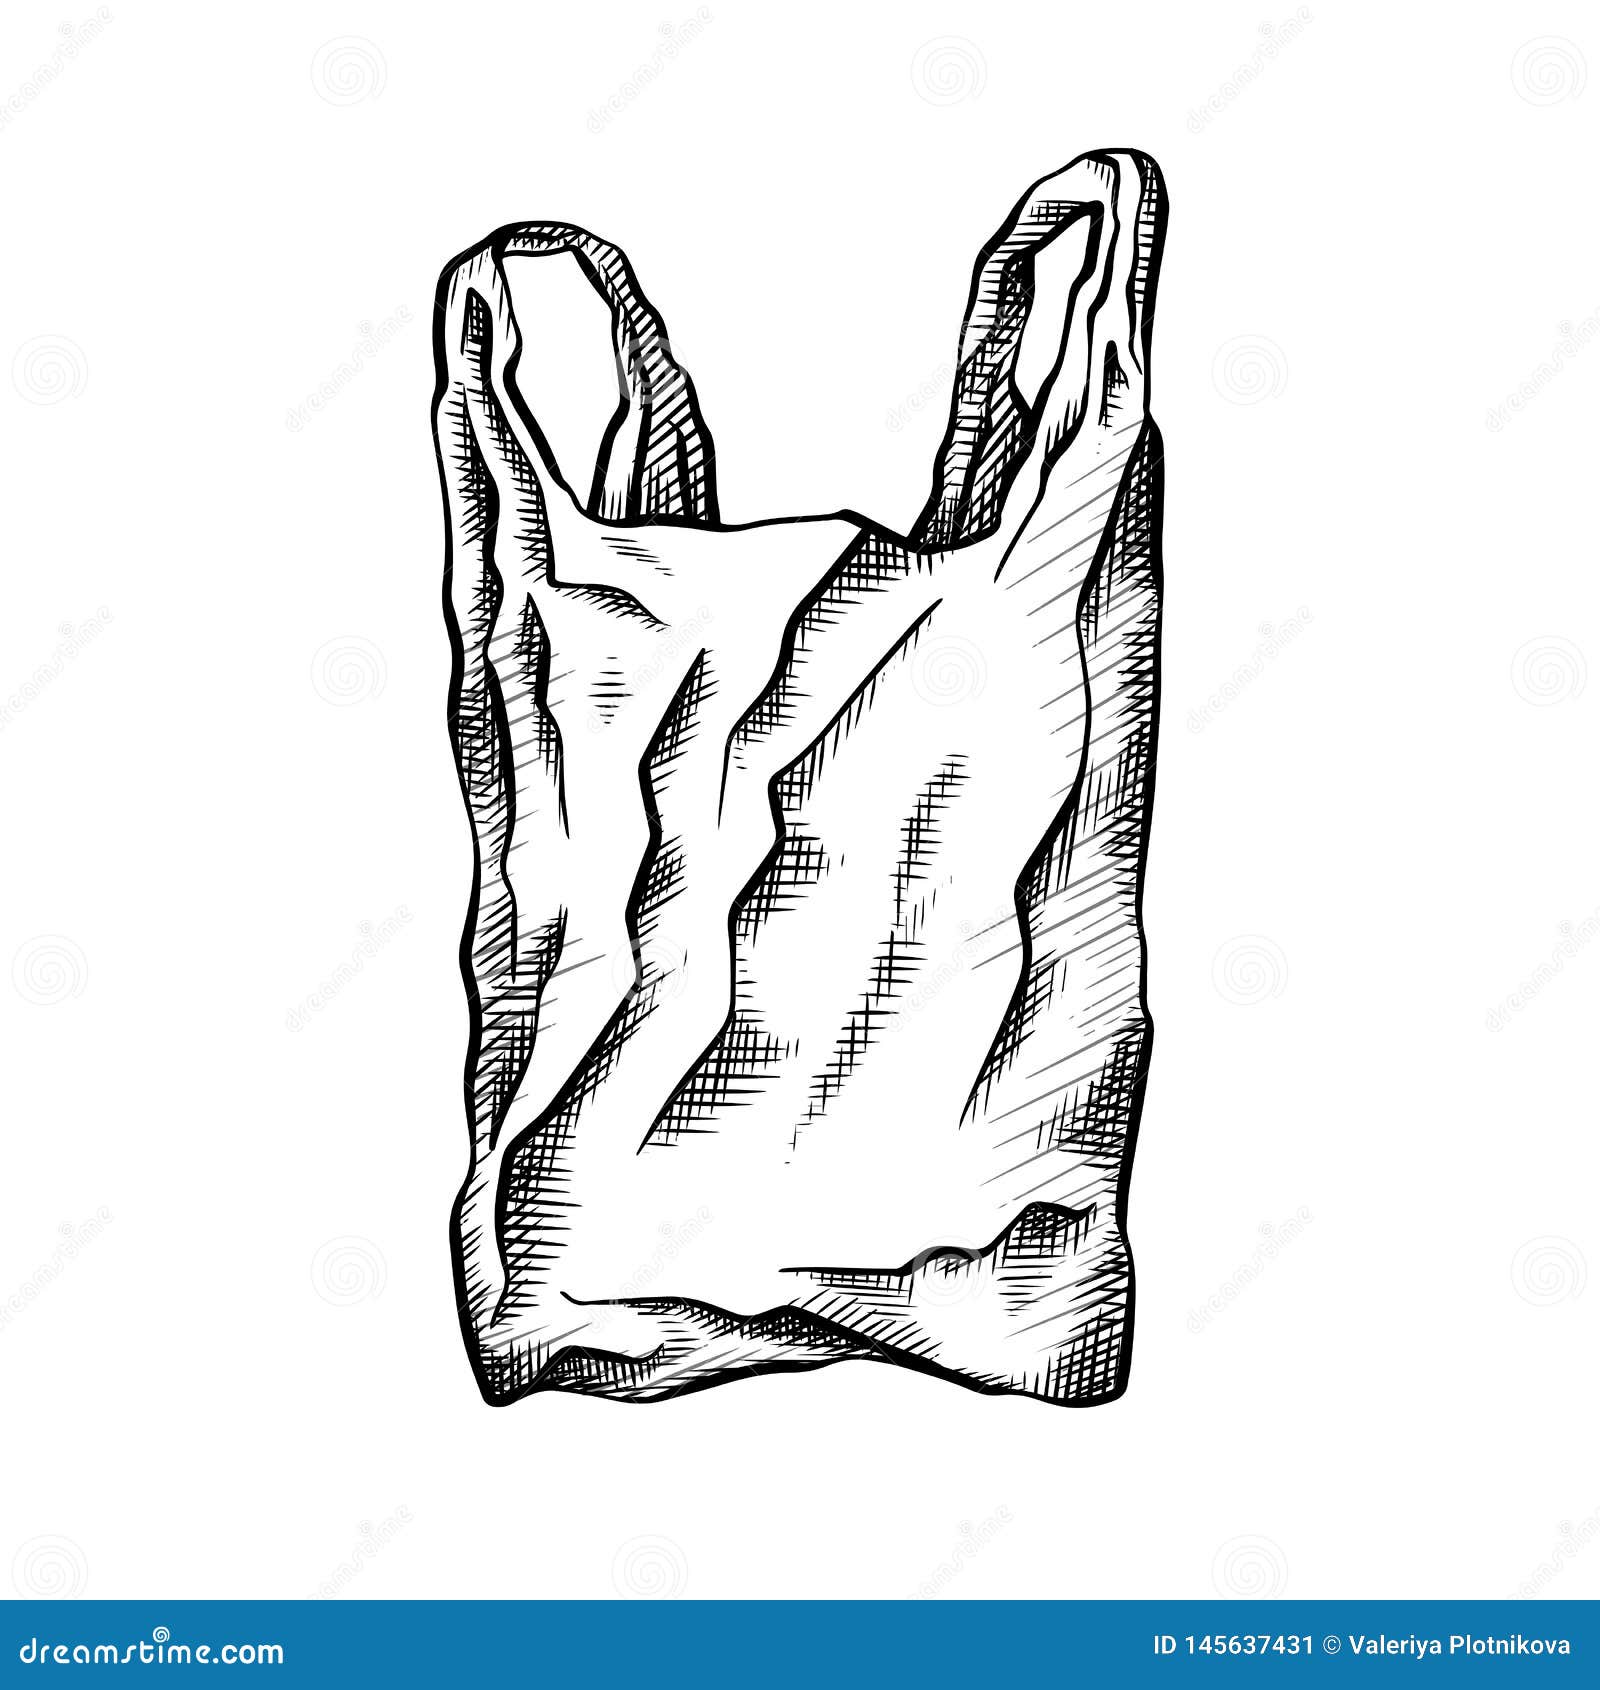 11,331 Plastic Bag Drawing Images, Stock Photos & Vectors | Shutterstock